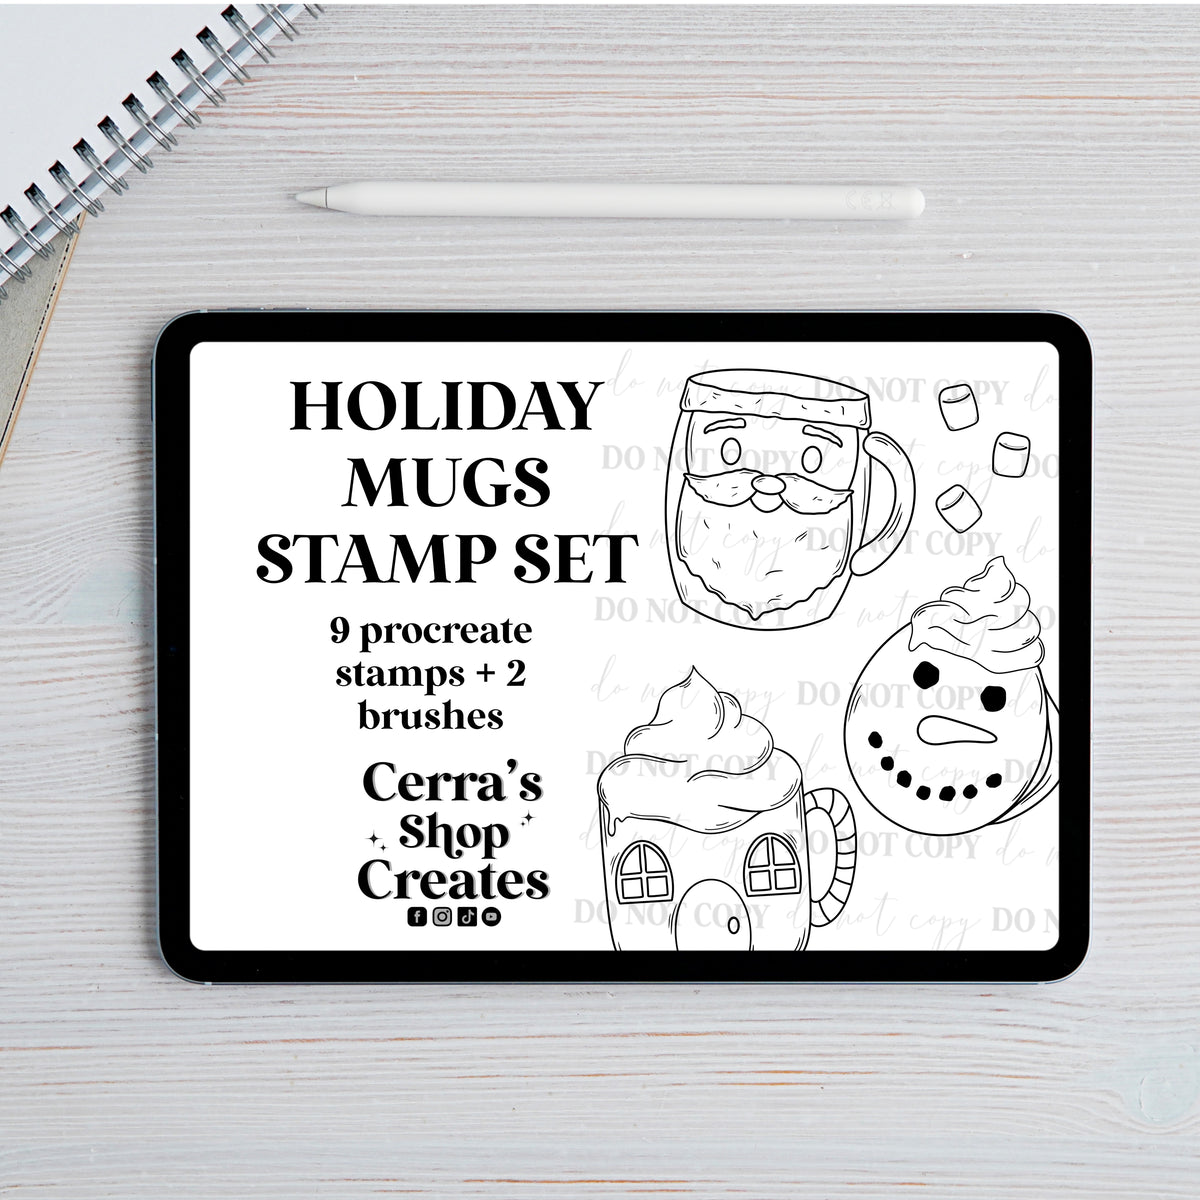 Holiday mugs Procreate Stamp Set